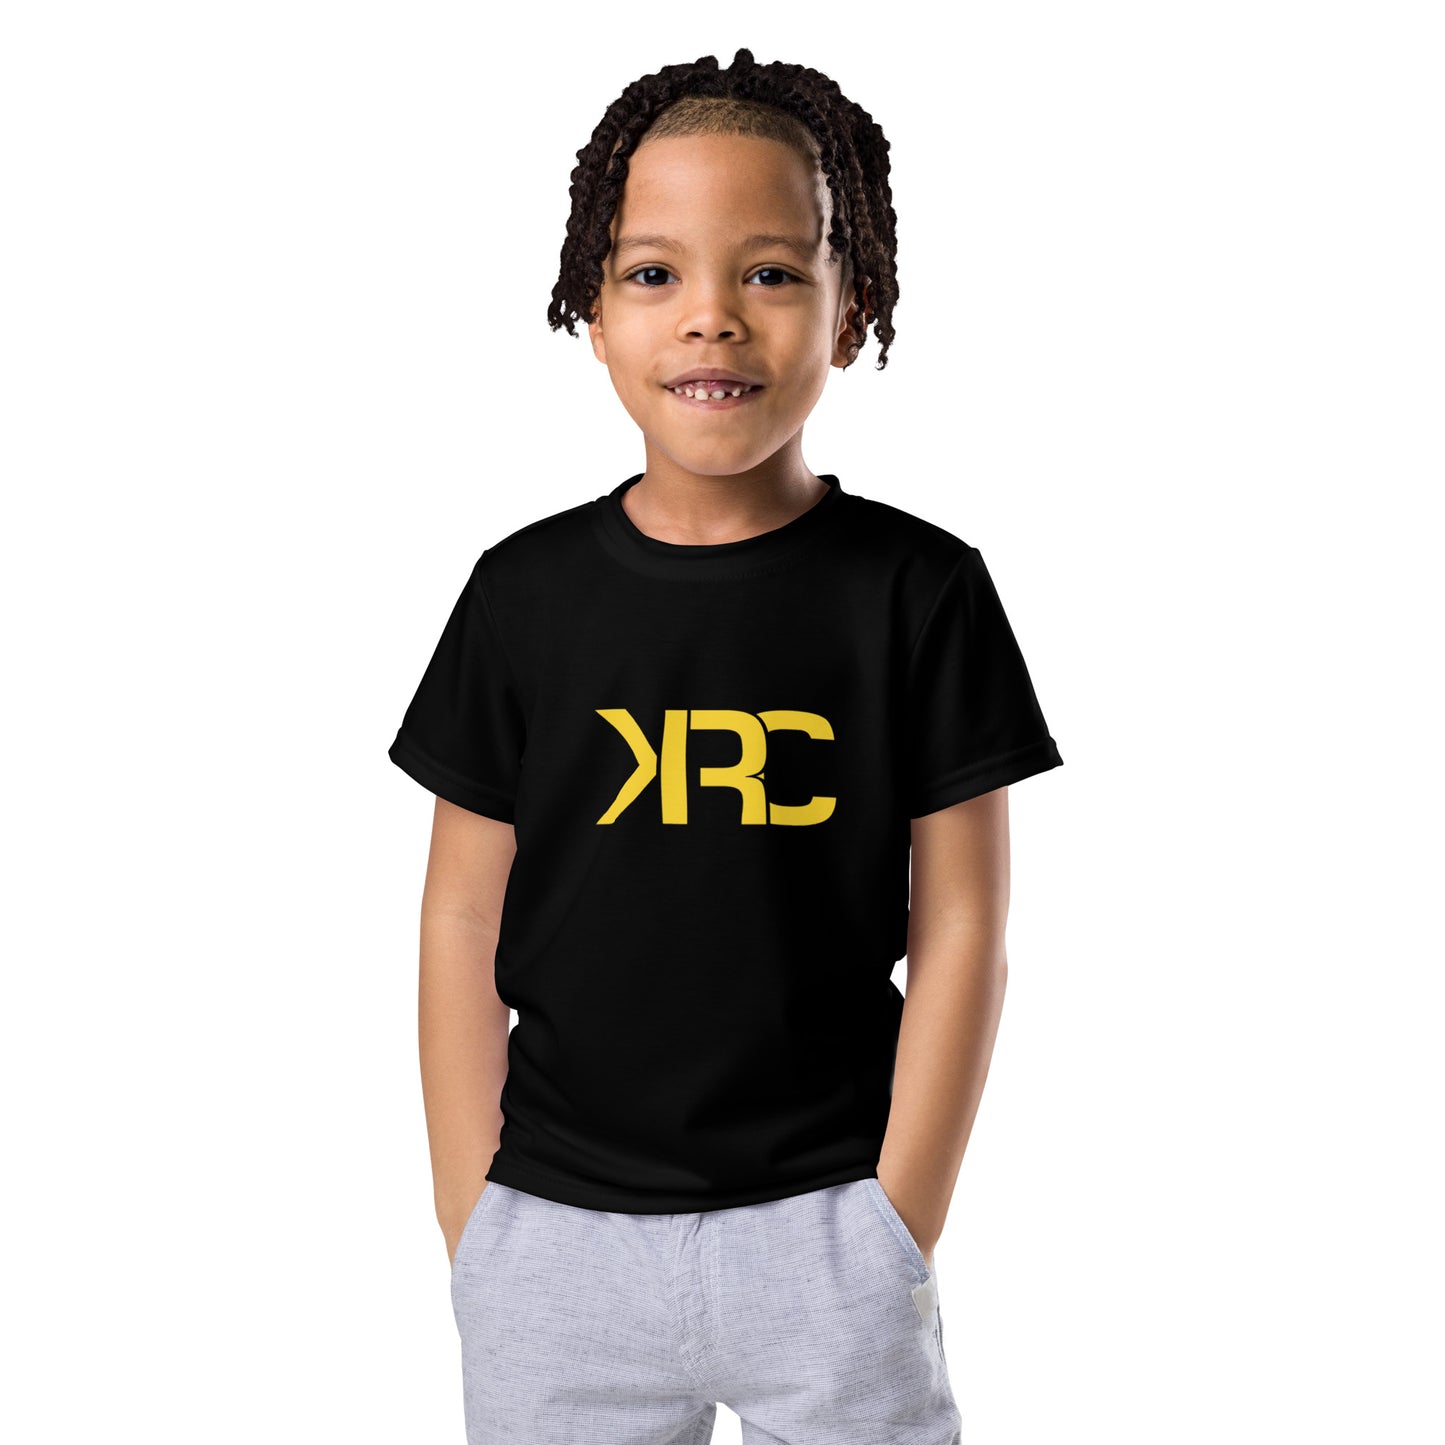 KRC Kids crew neck t-shirt